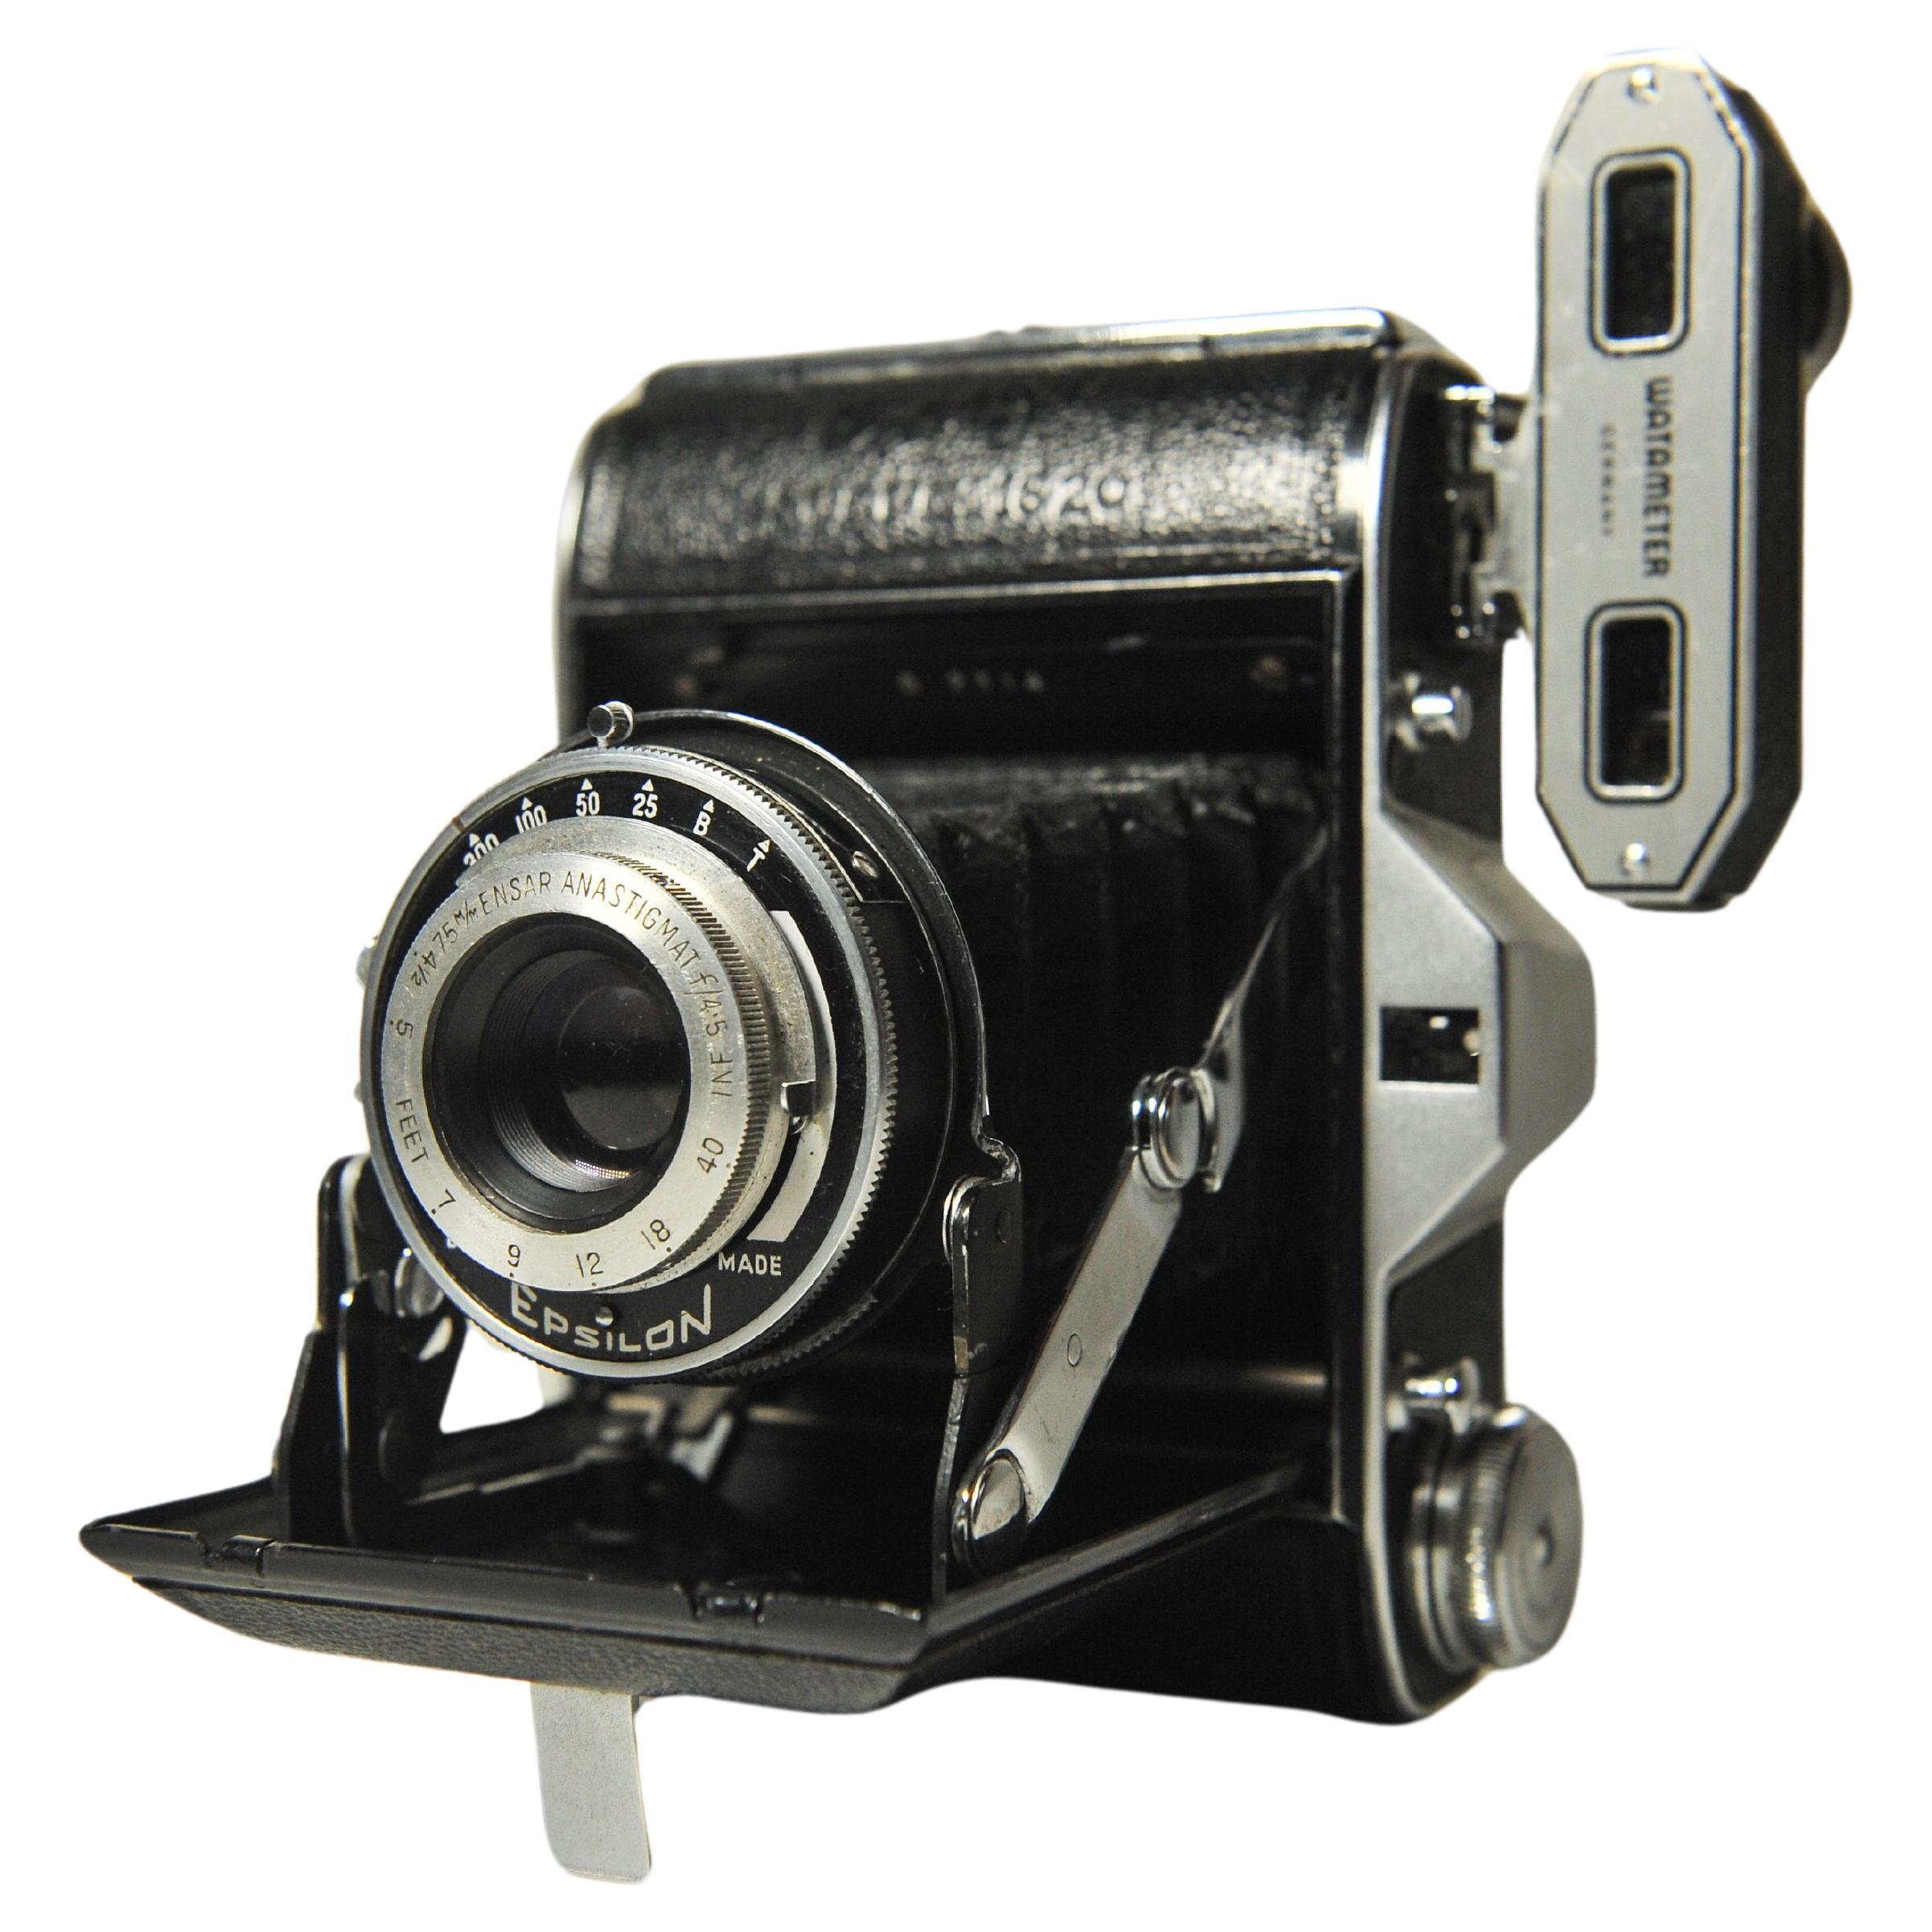 A British Made Ensign Selfix 16-20 Strut Folding Roll Medium Format Film Camera For Sale